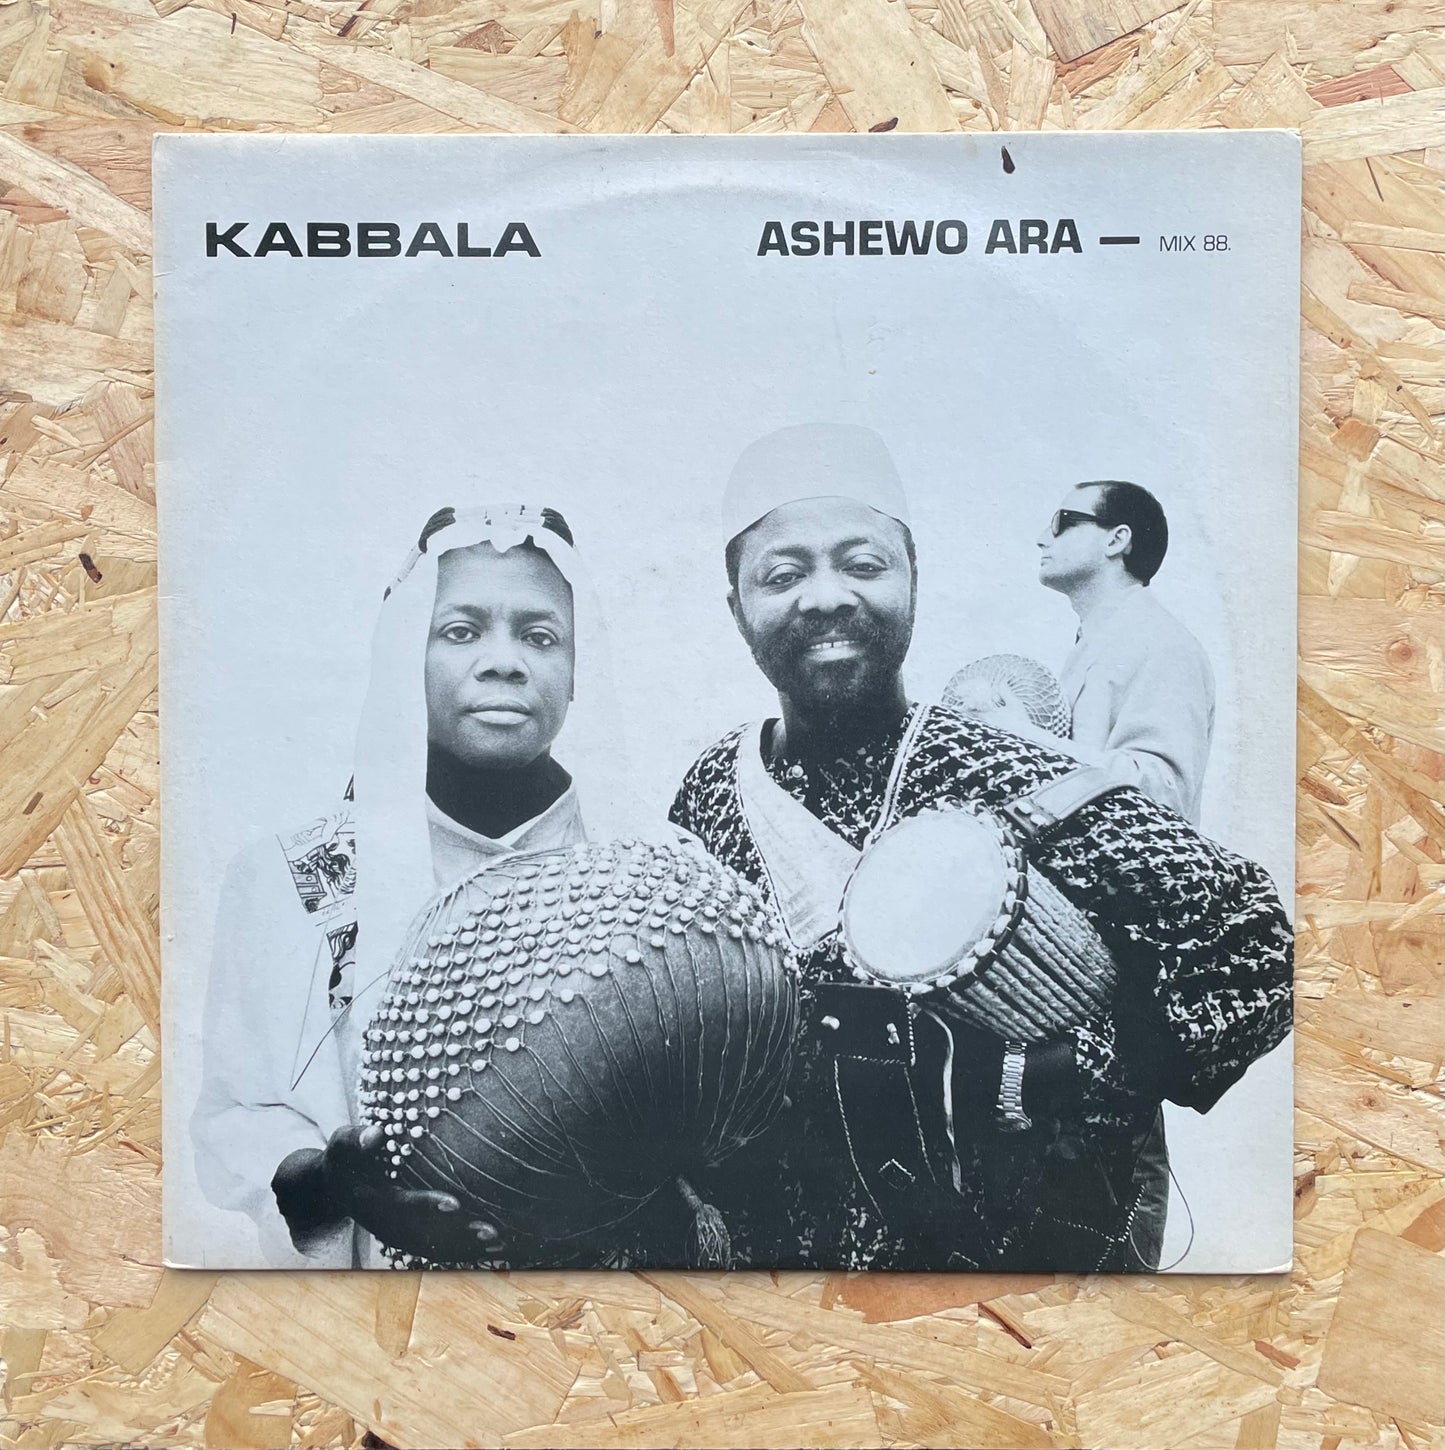 Kabbala – Ashewo Ara (Mix 88)